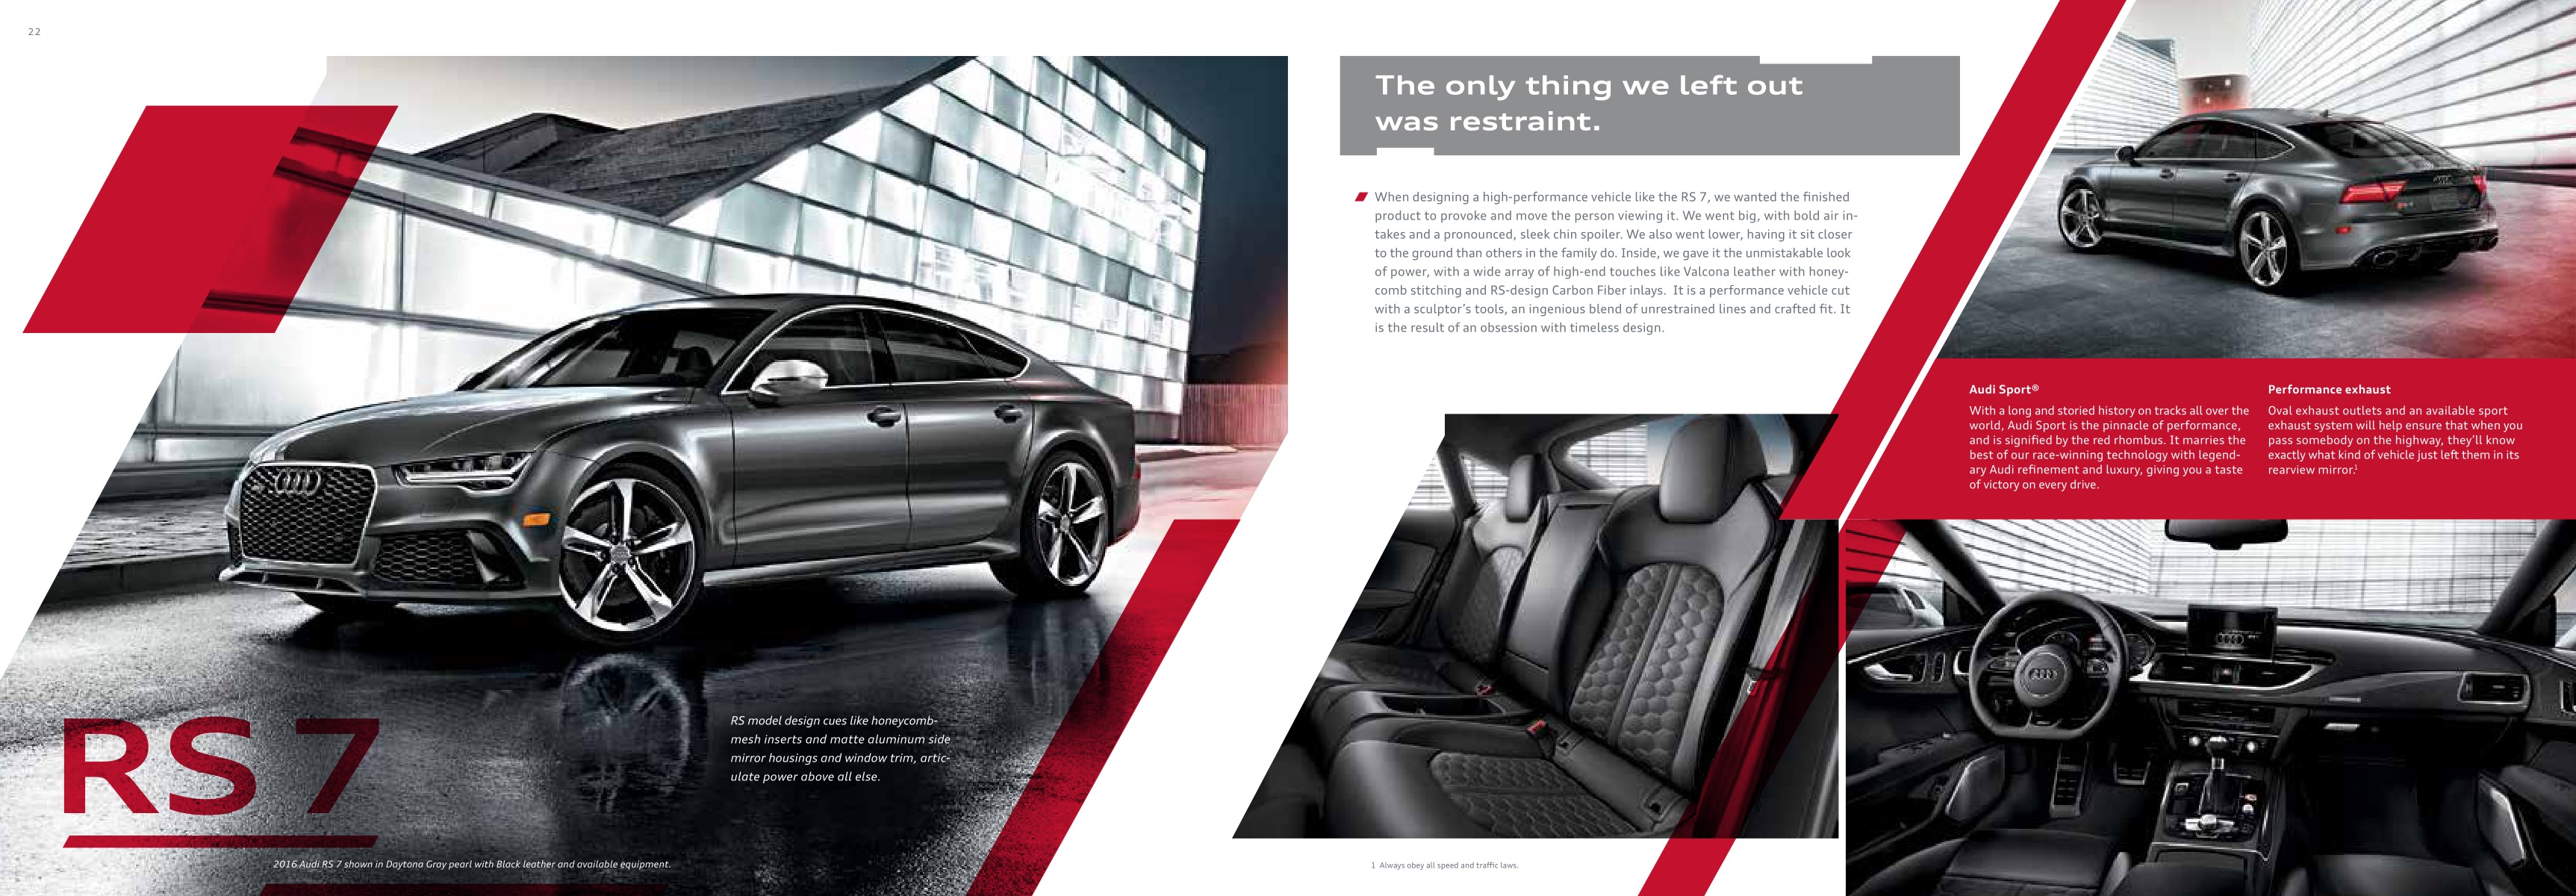 2016 Audi A7 Brochure Page 13